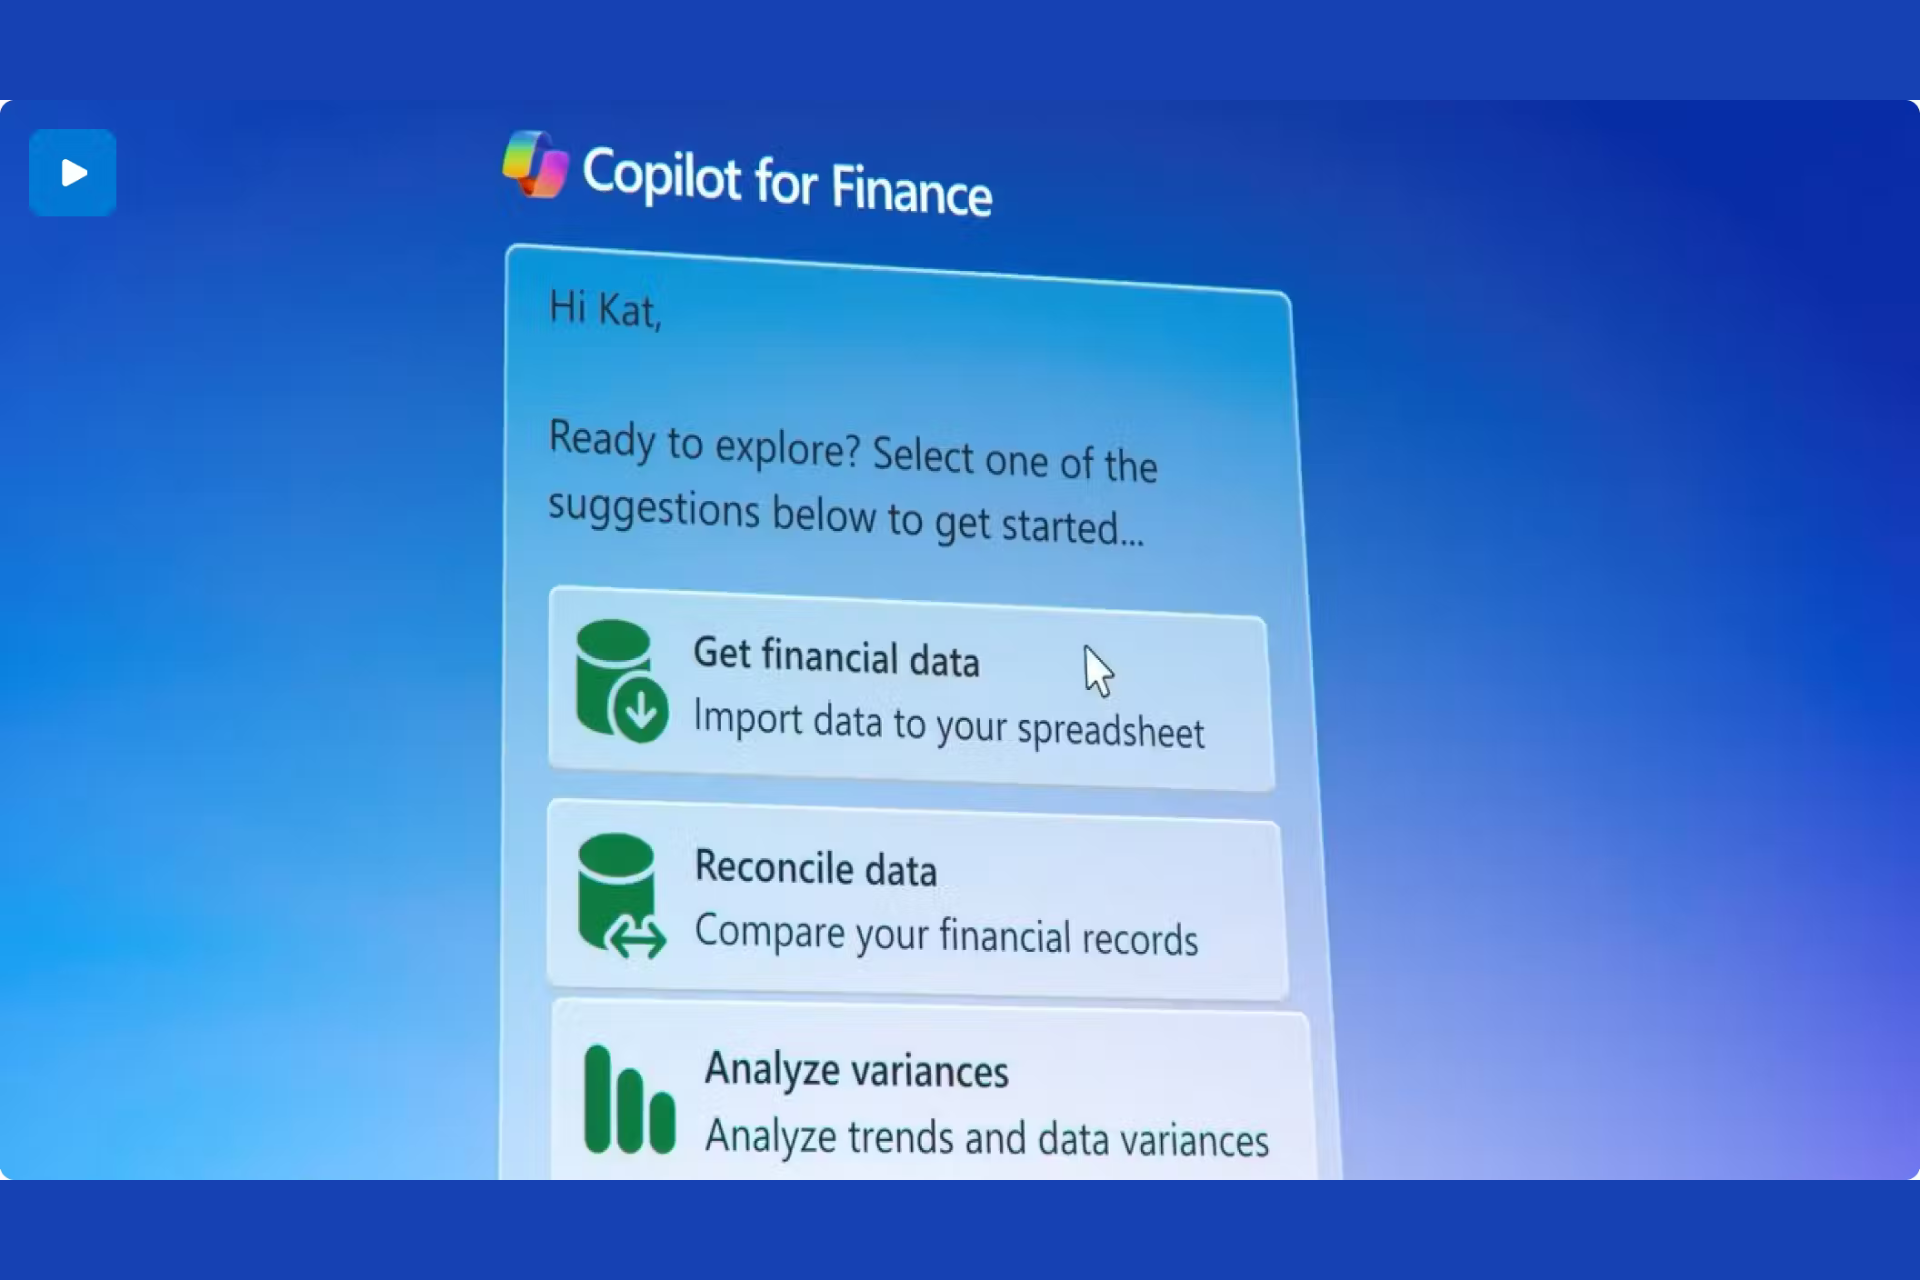 Microsoft unveiled Copilot for Finance